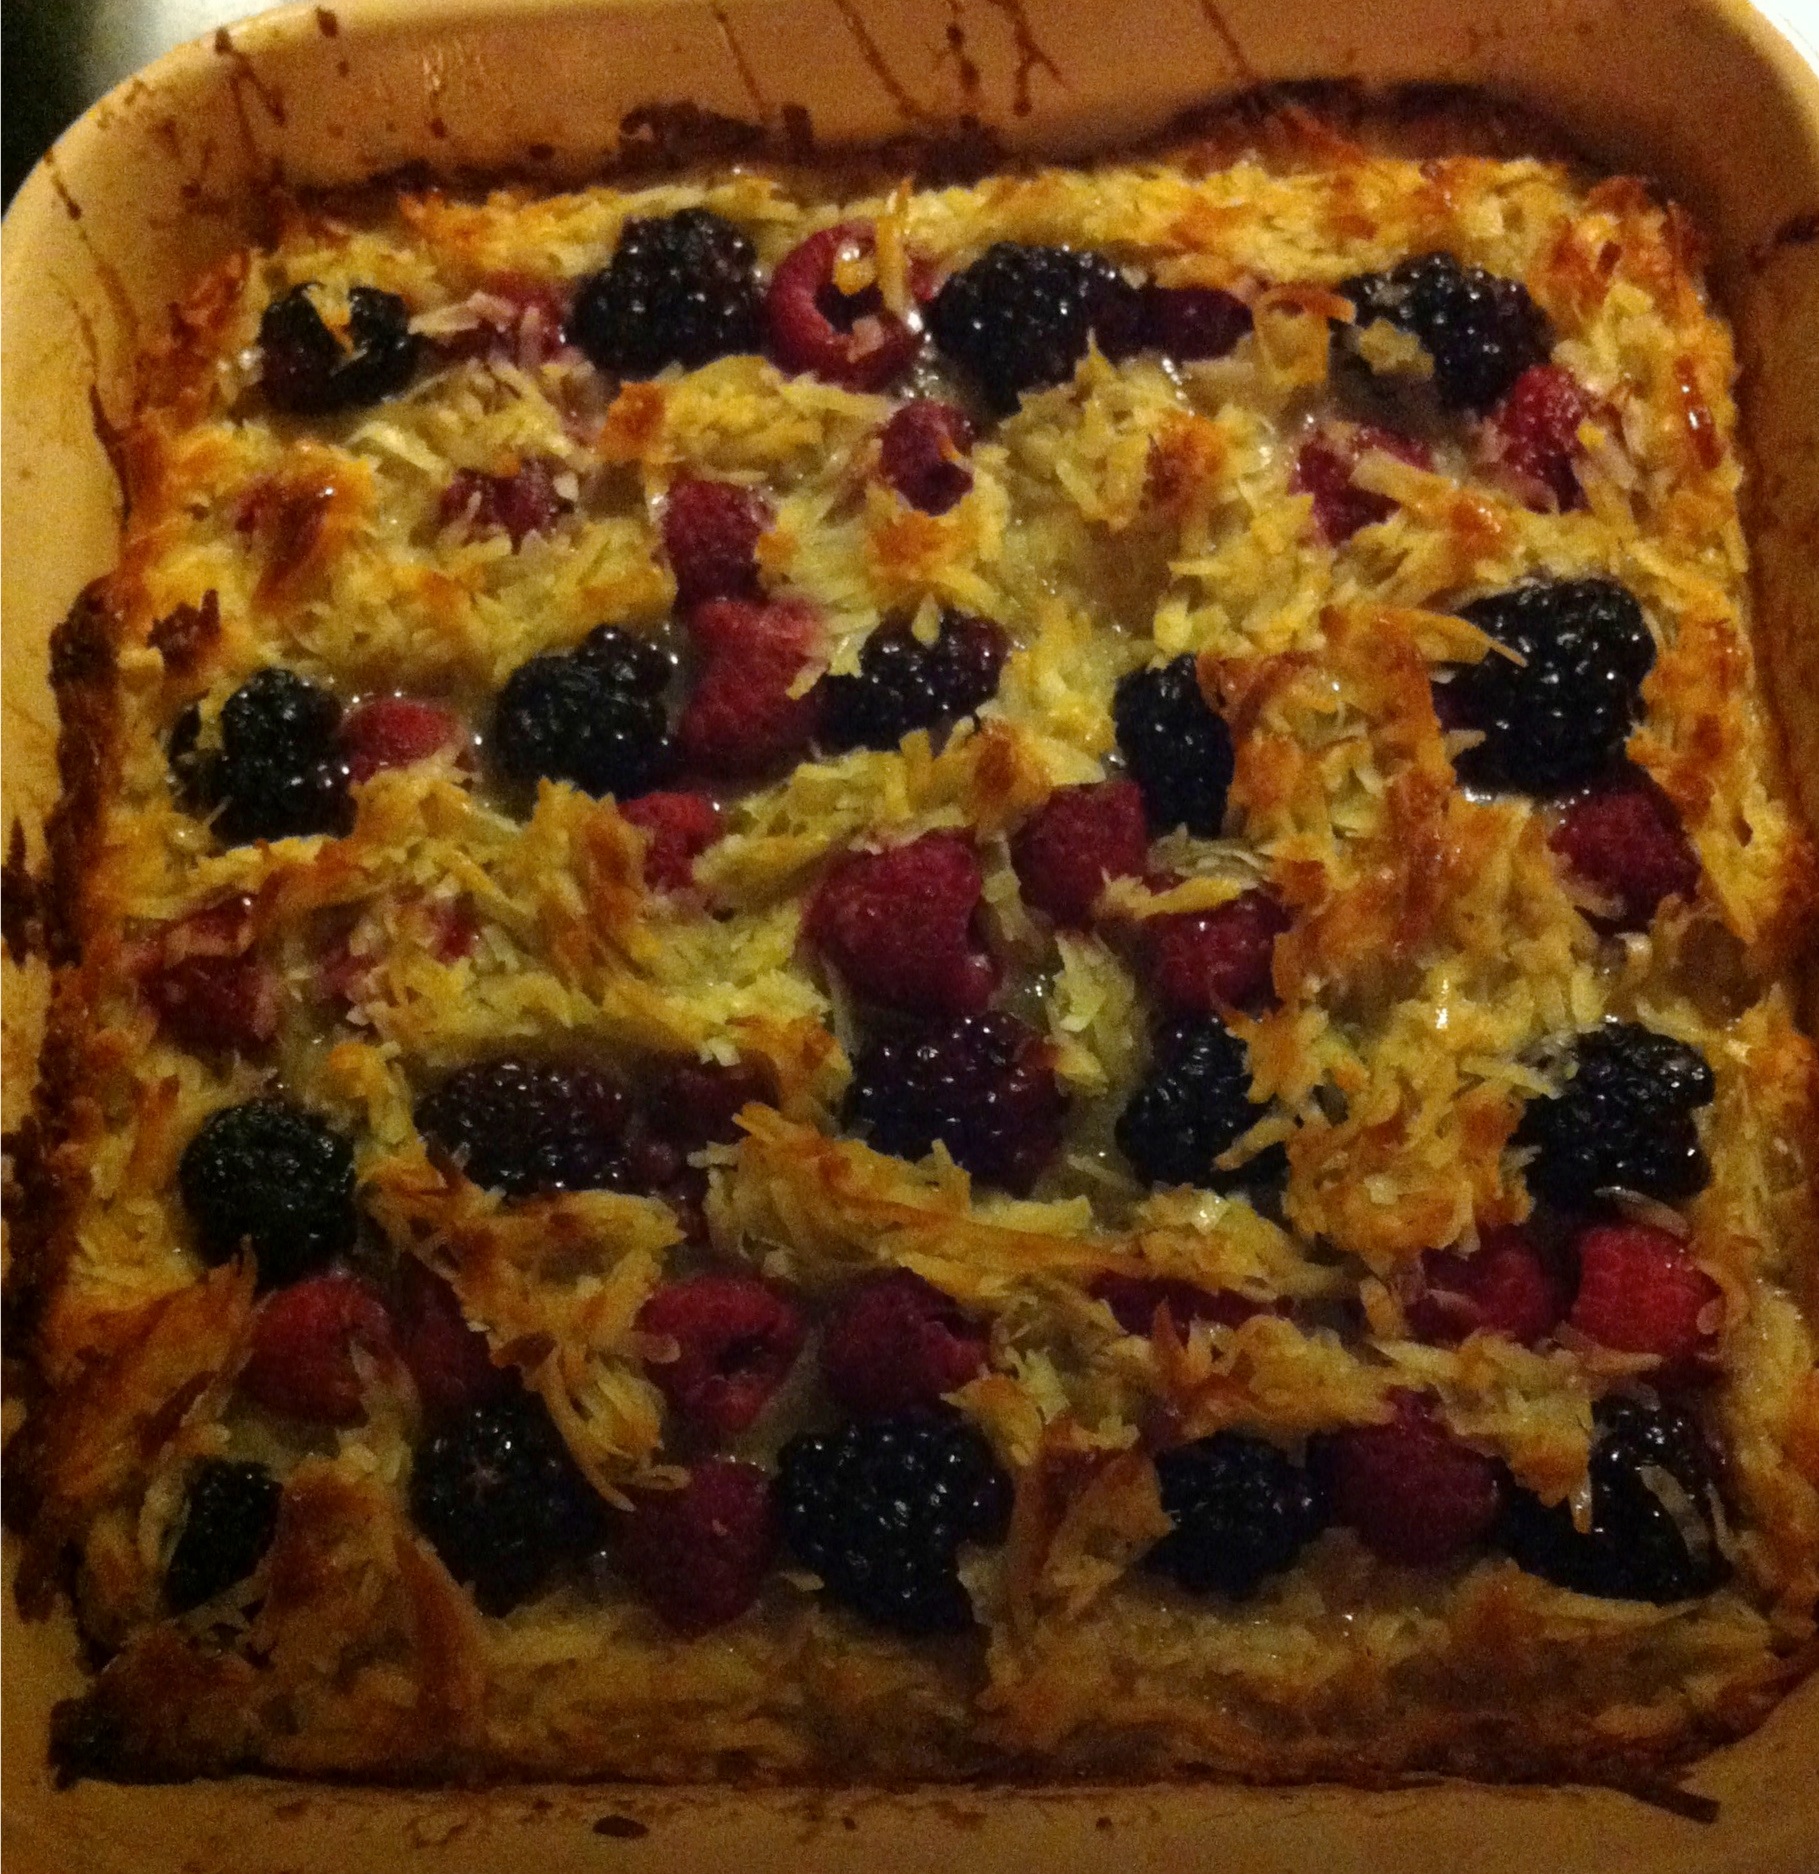 Coconut, raspberry, blackberry tarte in a Le Creuset pan.